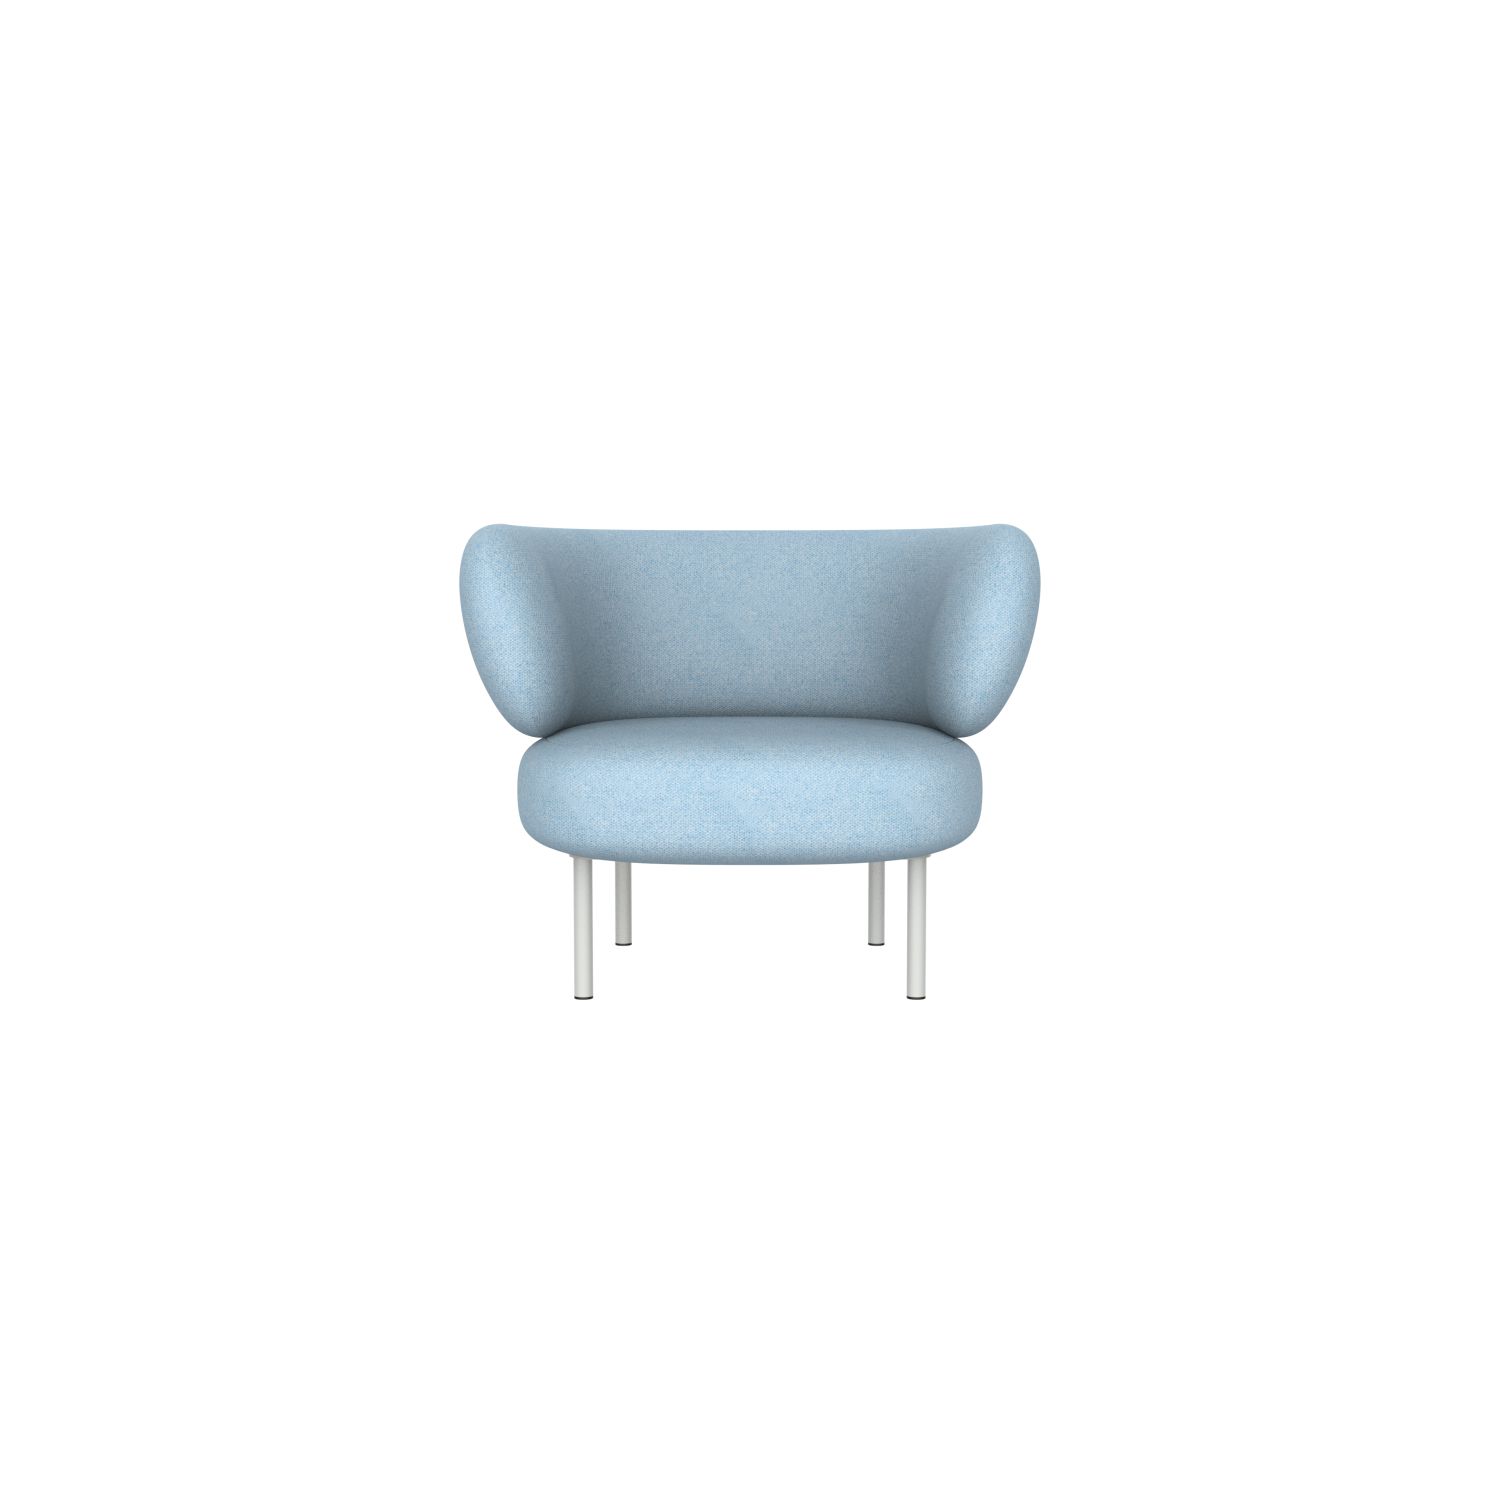 lensvelt studio stefan scholten sofa 1seater 100x77cm middle lounge part moss pastel blue 40 frame light grey ral7035